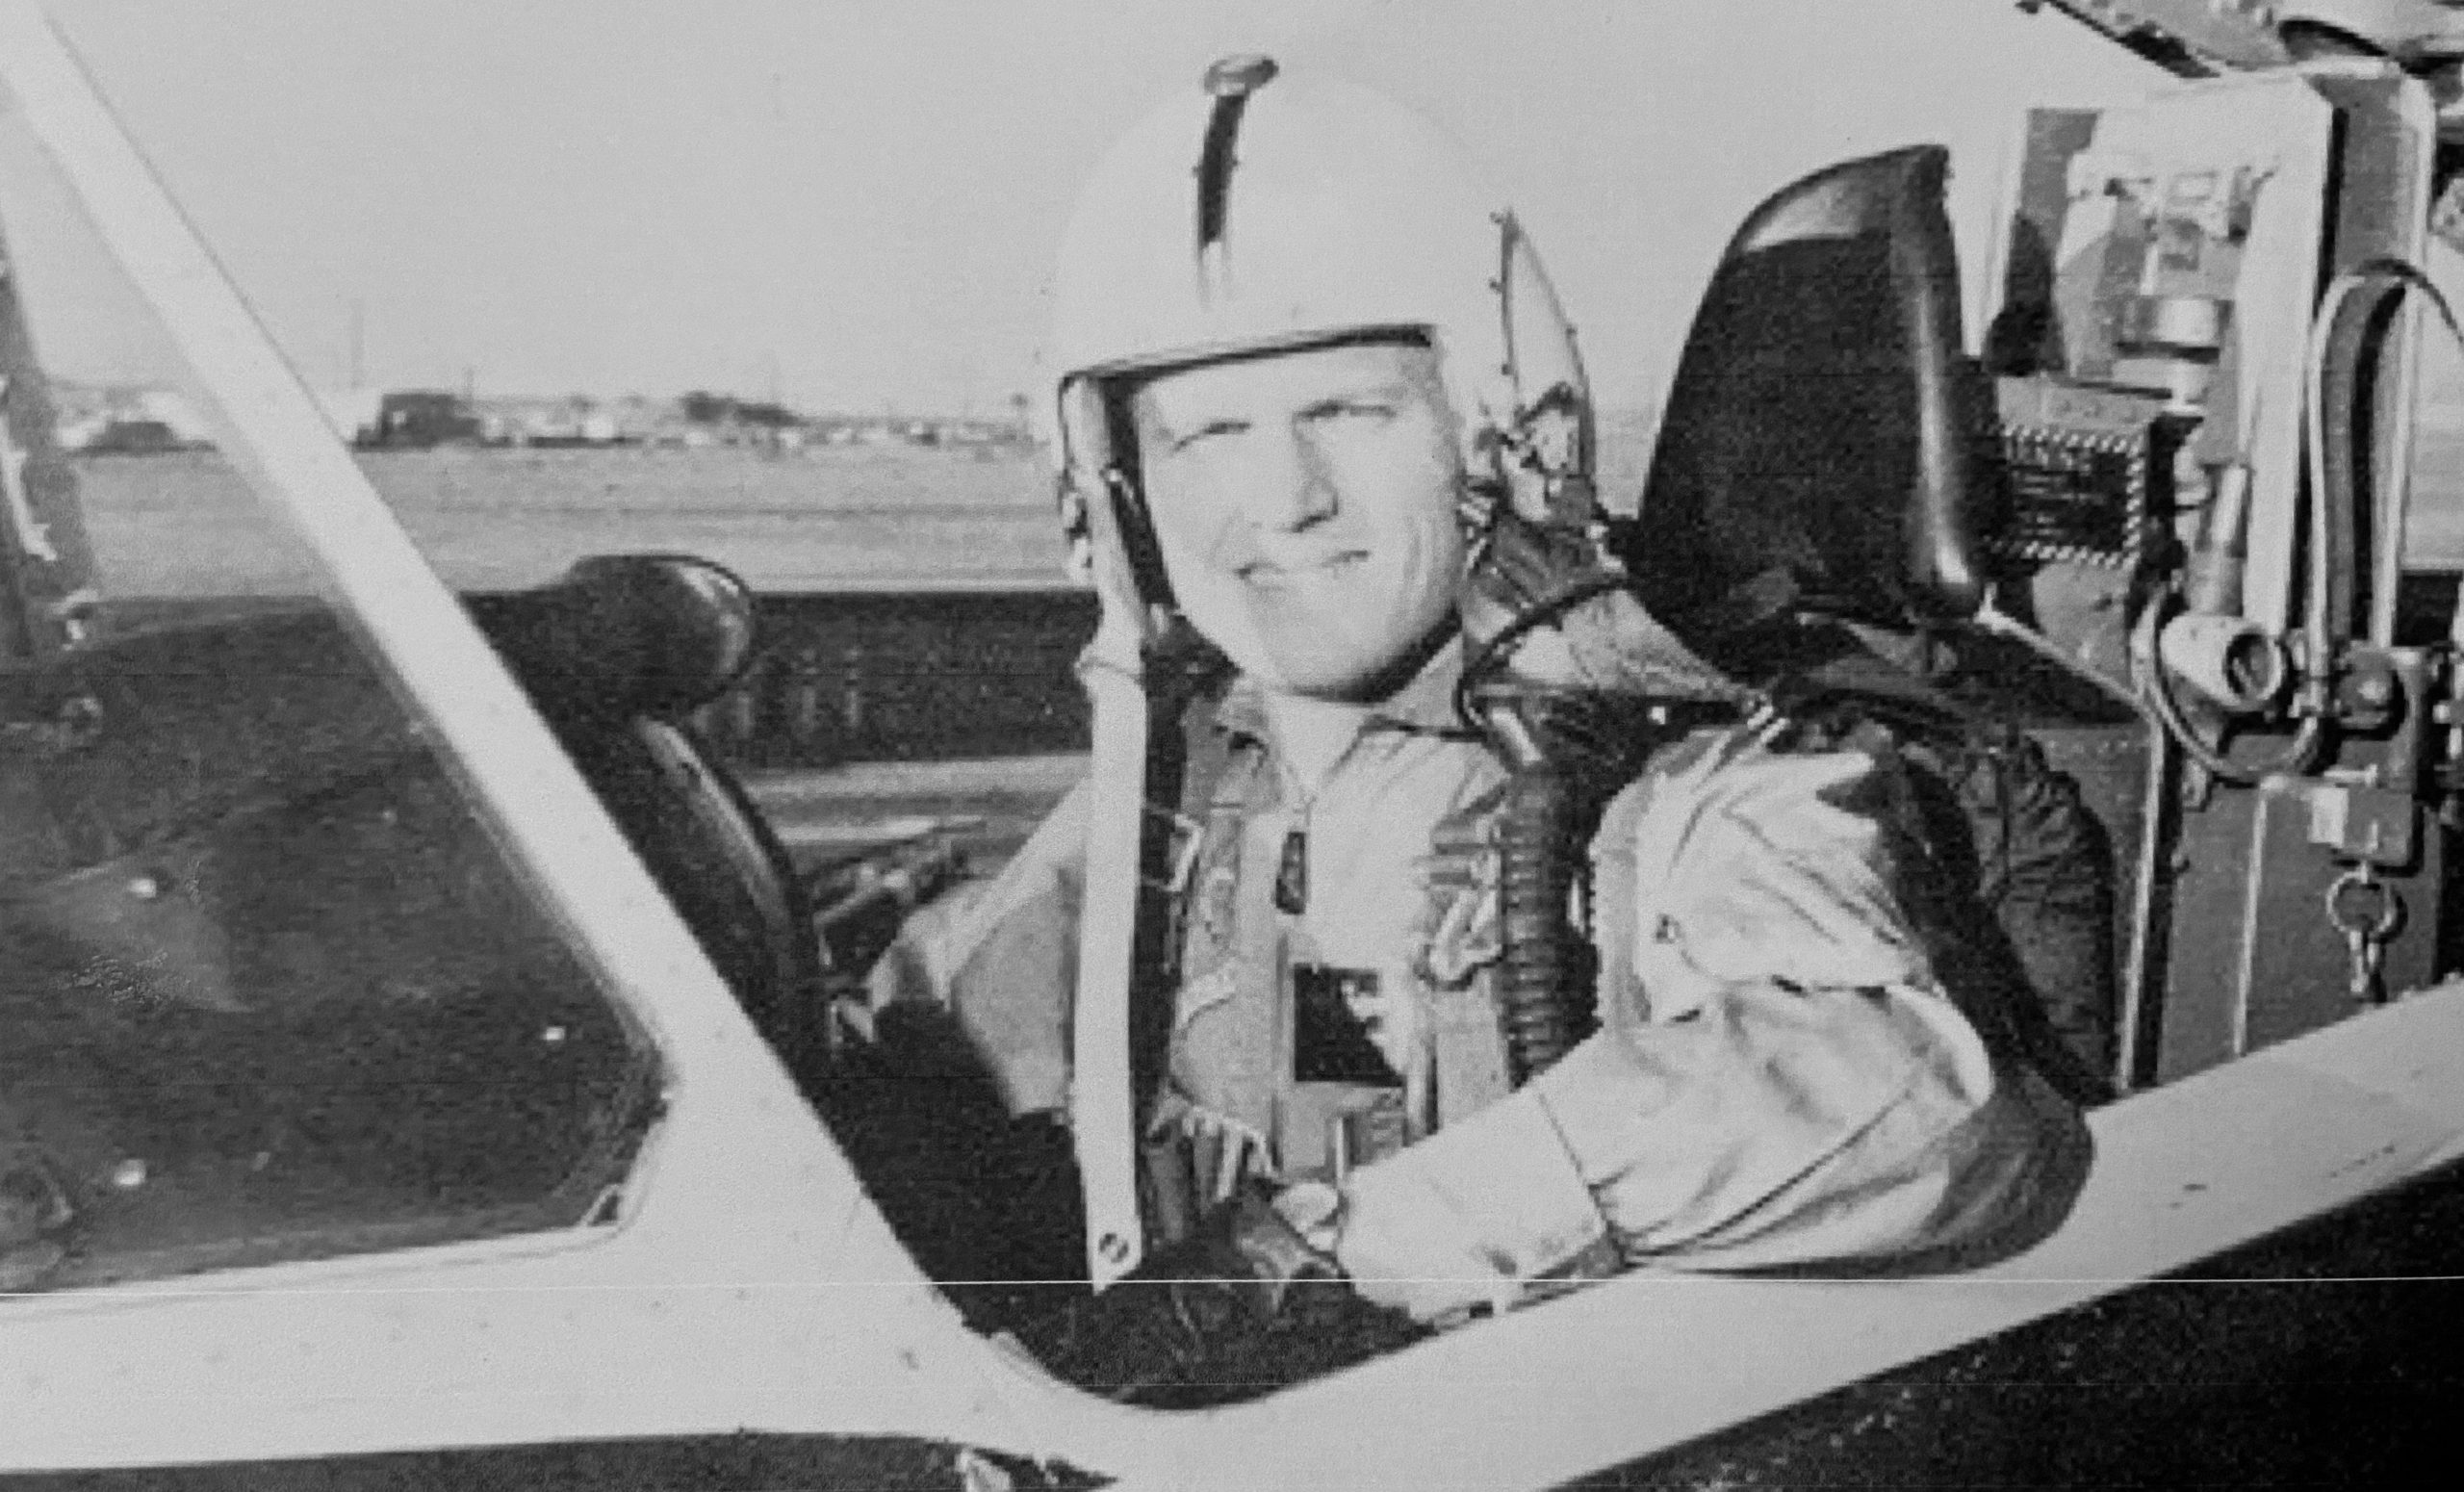 Frank in his F-84F